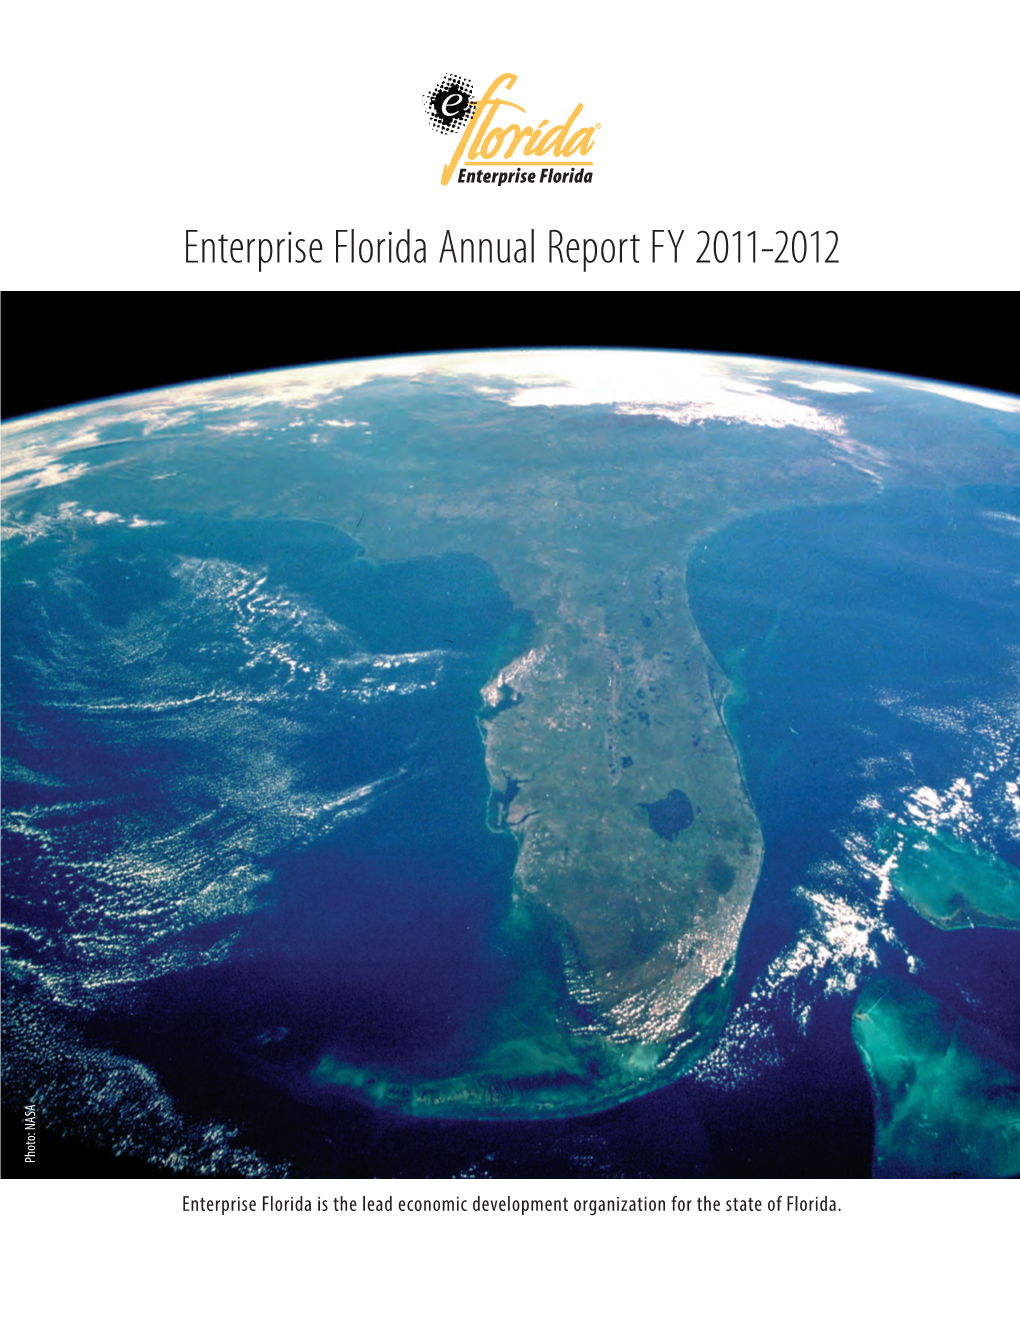 Enterprise Florida Annual Report FY 2011-2012 Photo: Nasaphoto